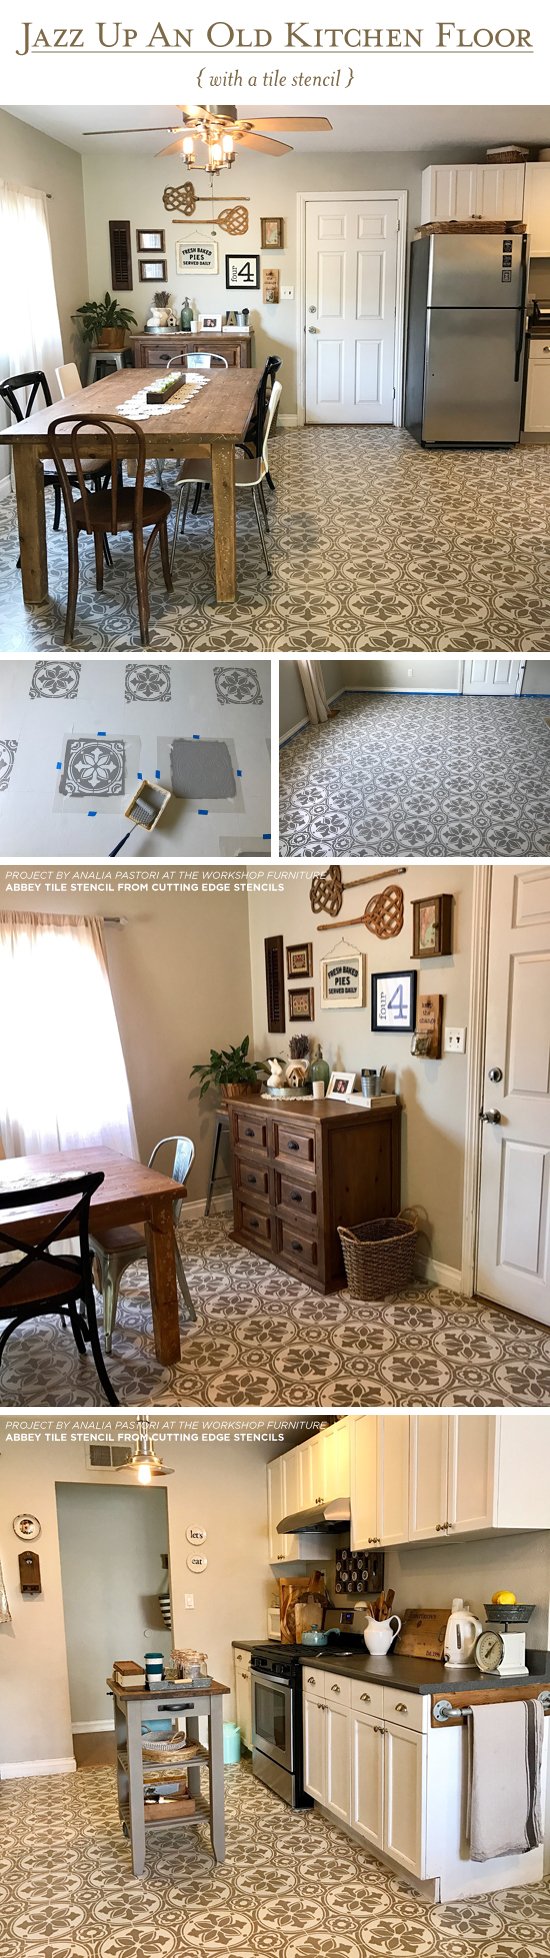 Cutting Edge Stencils shares a DIY stenciled and painted linoleum kitchen floor using the Abbey Tile Stencil. http://www.cuttingedgestencils.com/Cement-tile-stencils-stenciled-floor-tiles.html